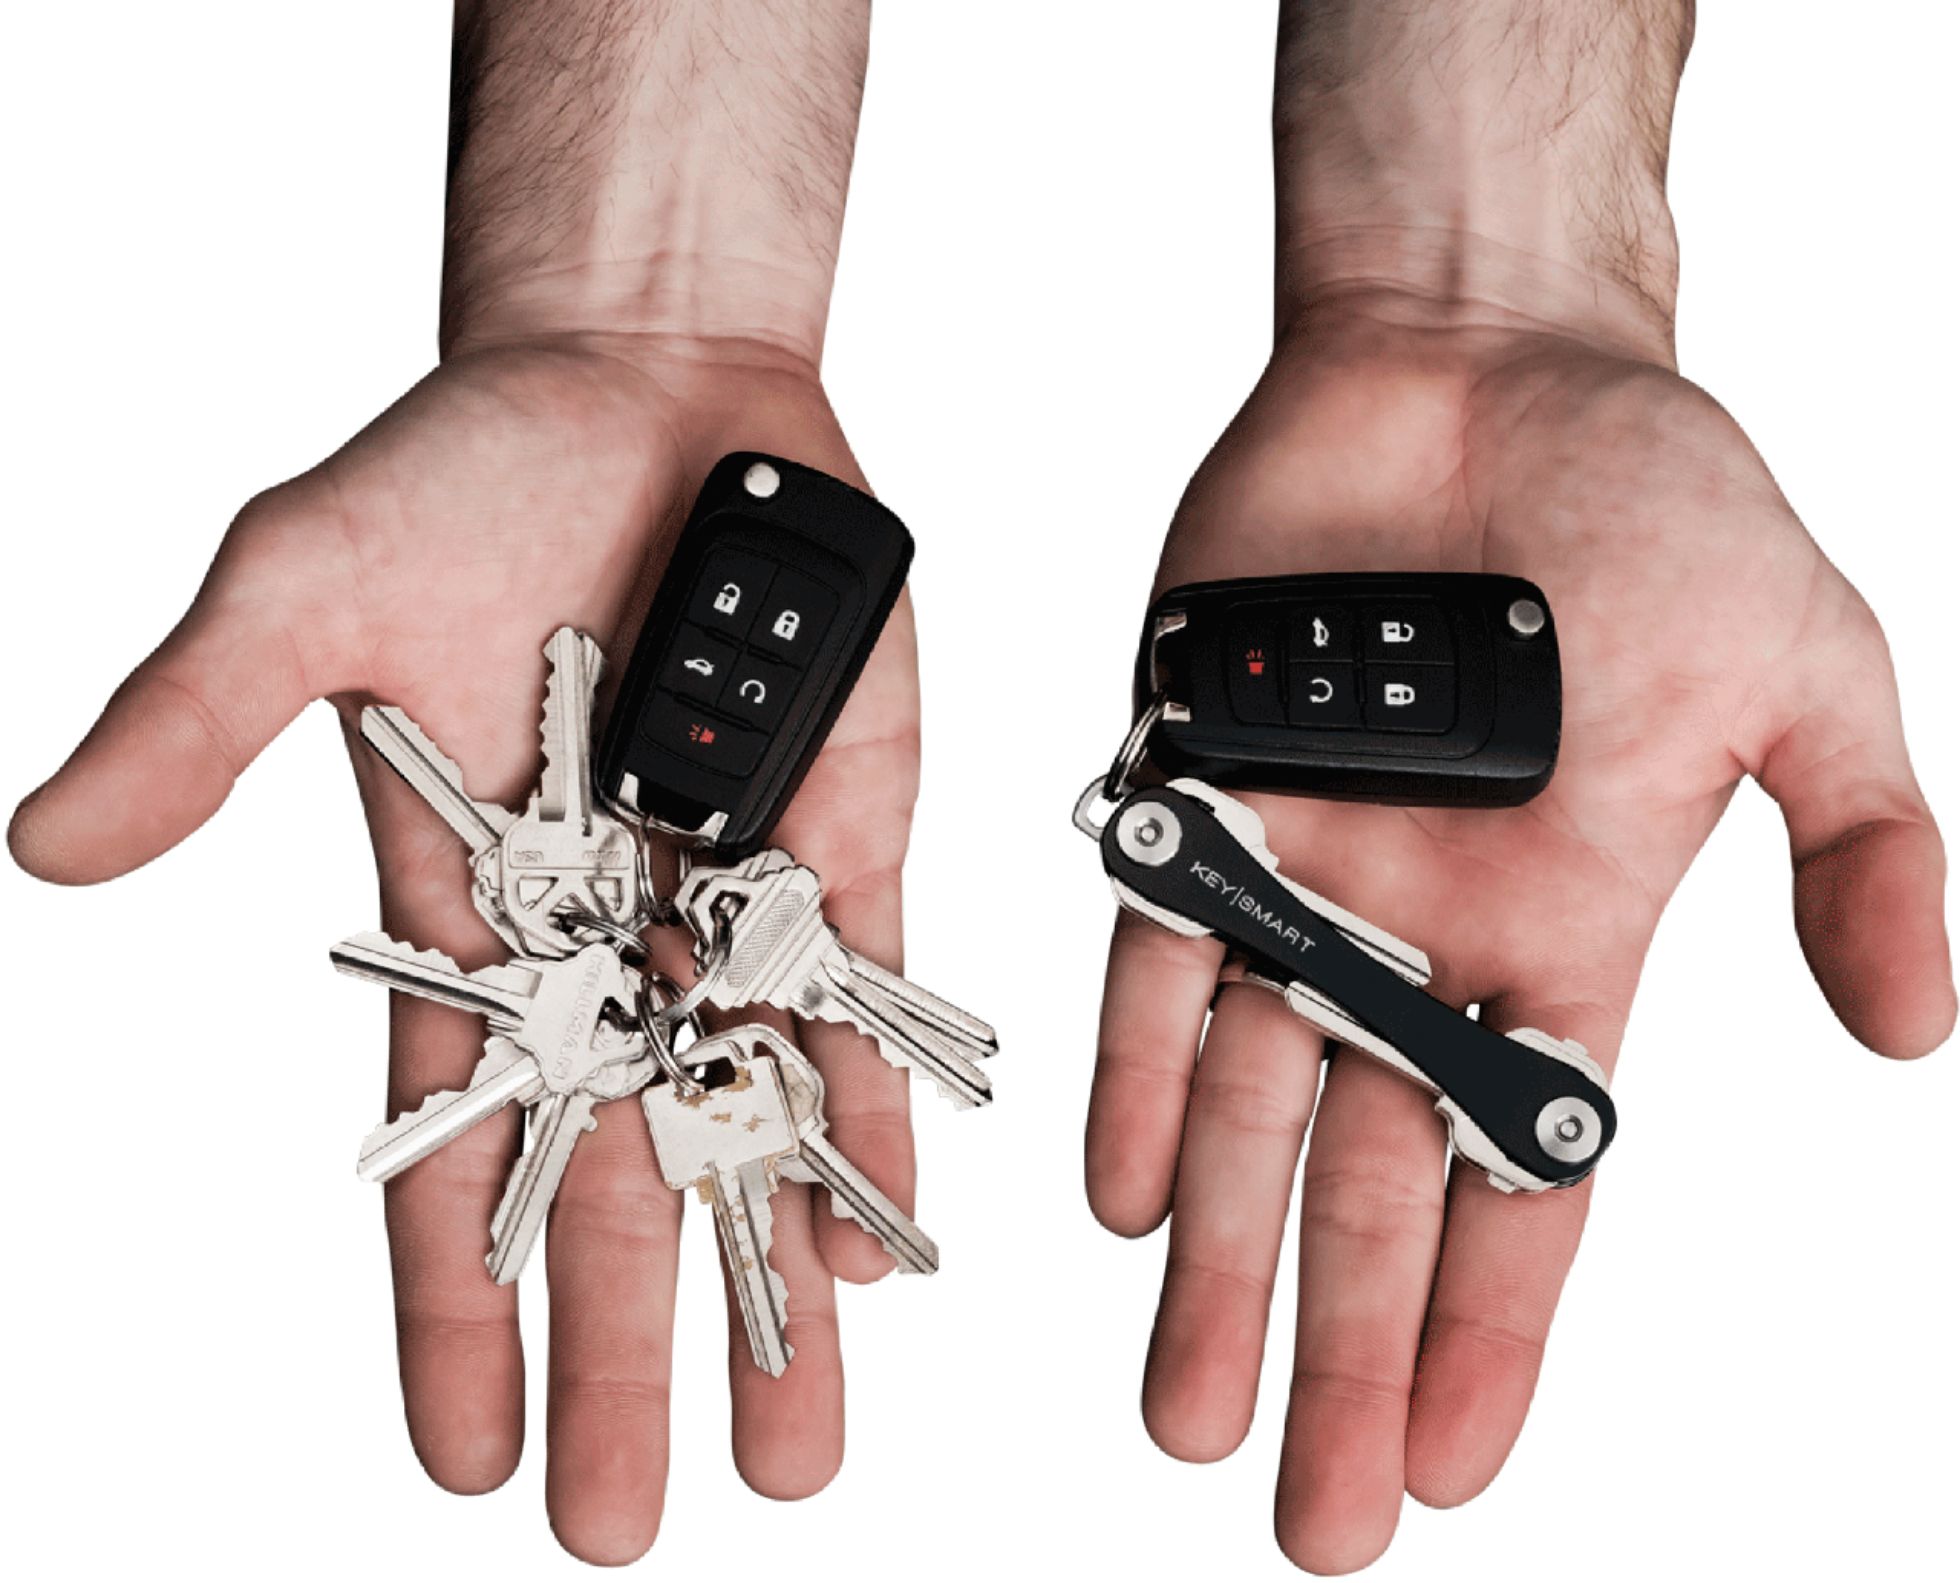 KeySmart Black Compact Key Holder